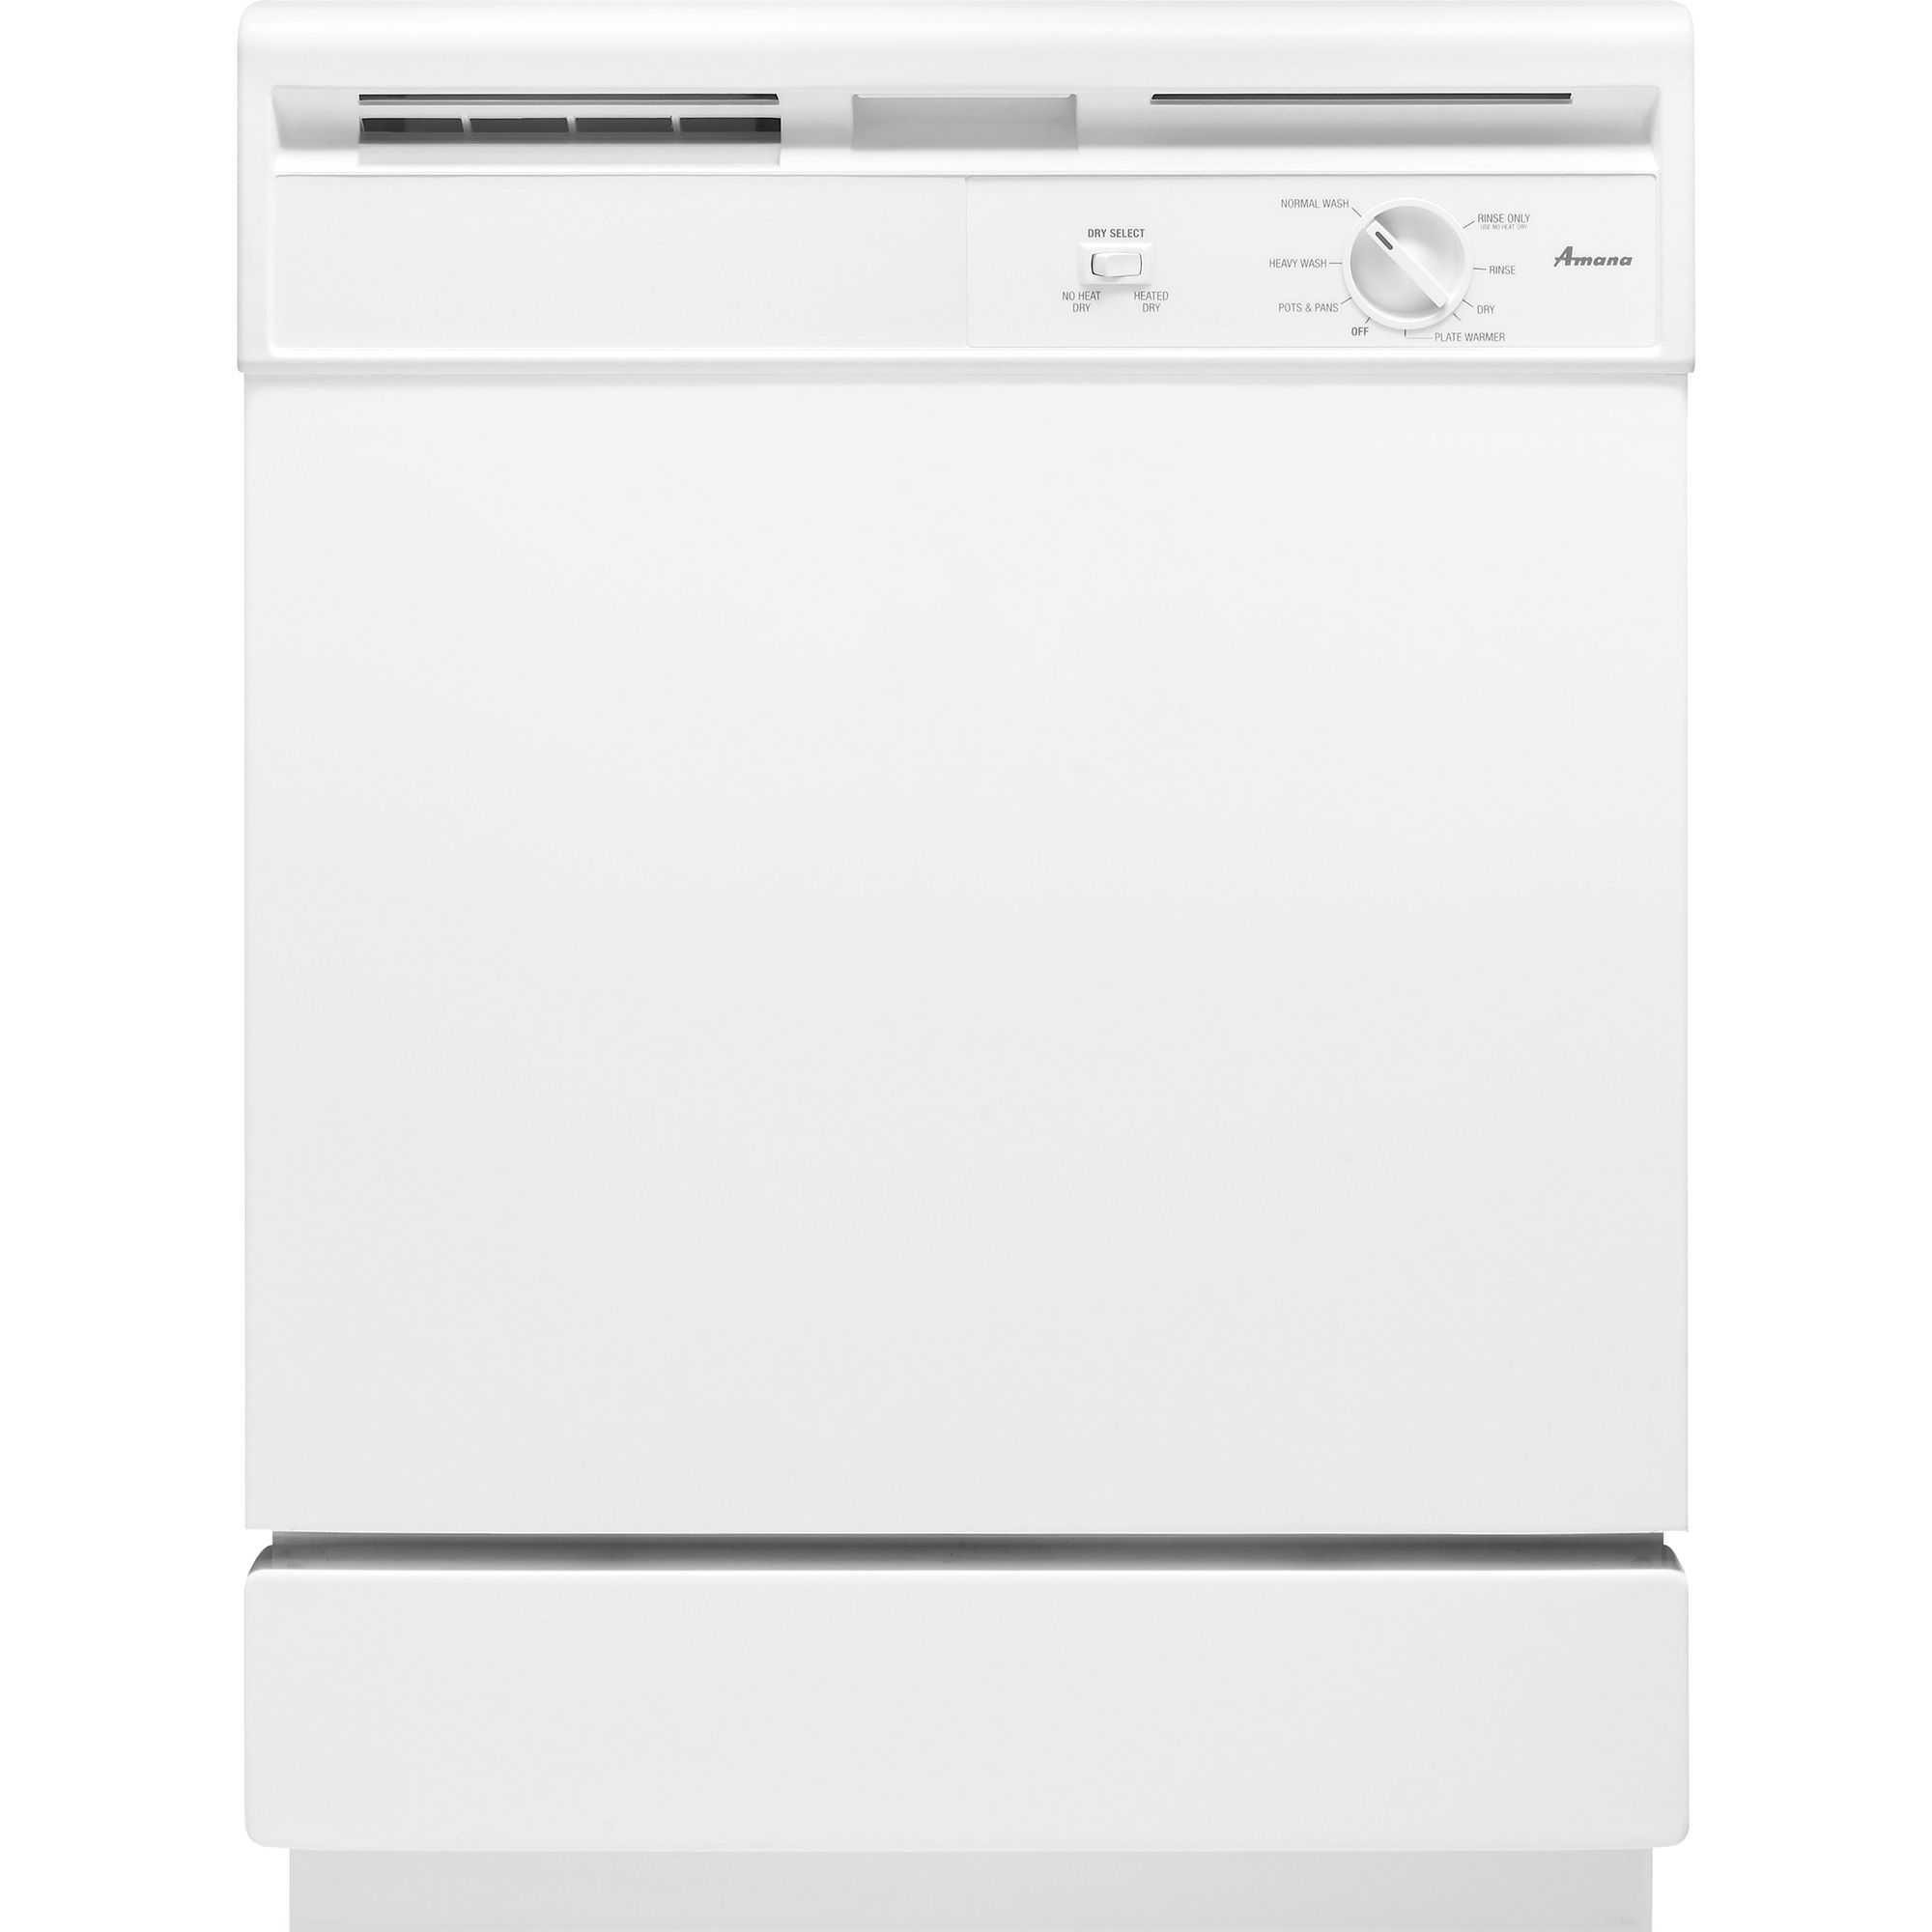 24 in. Built-In Dishwasher - White